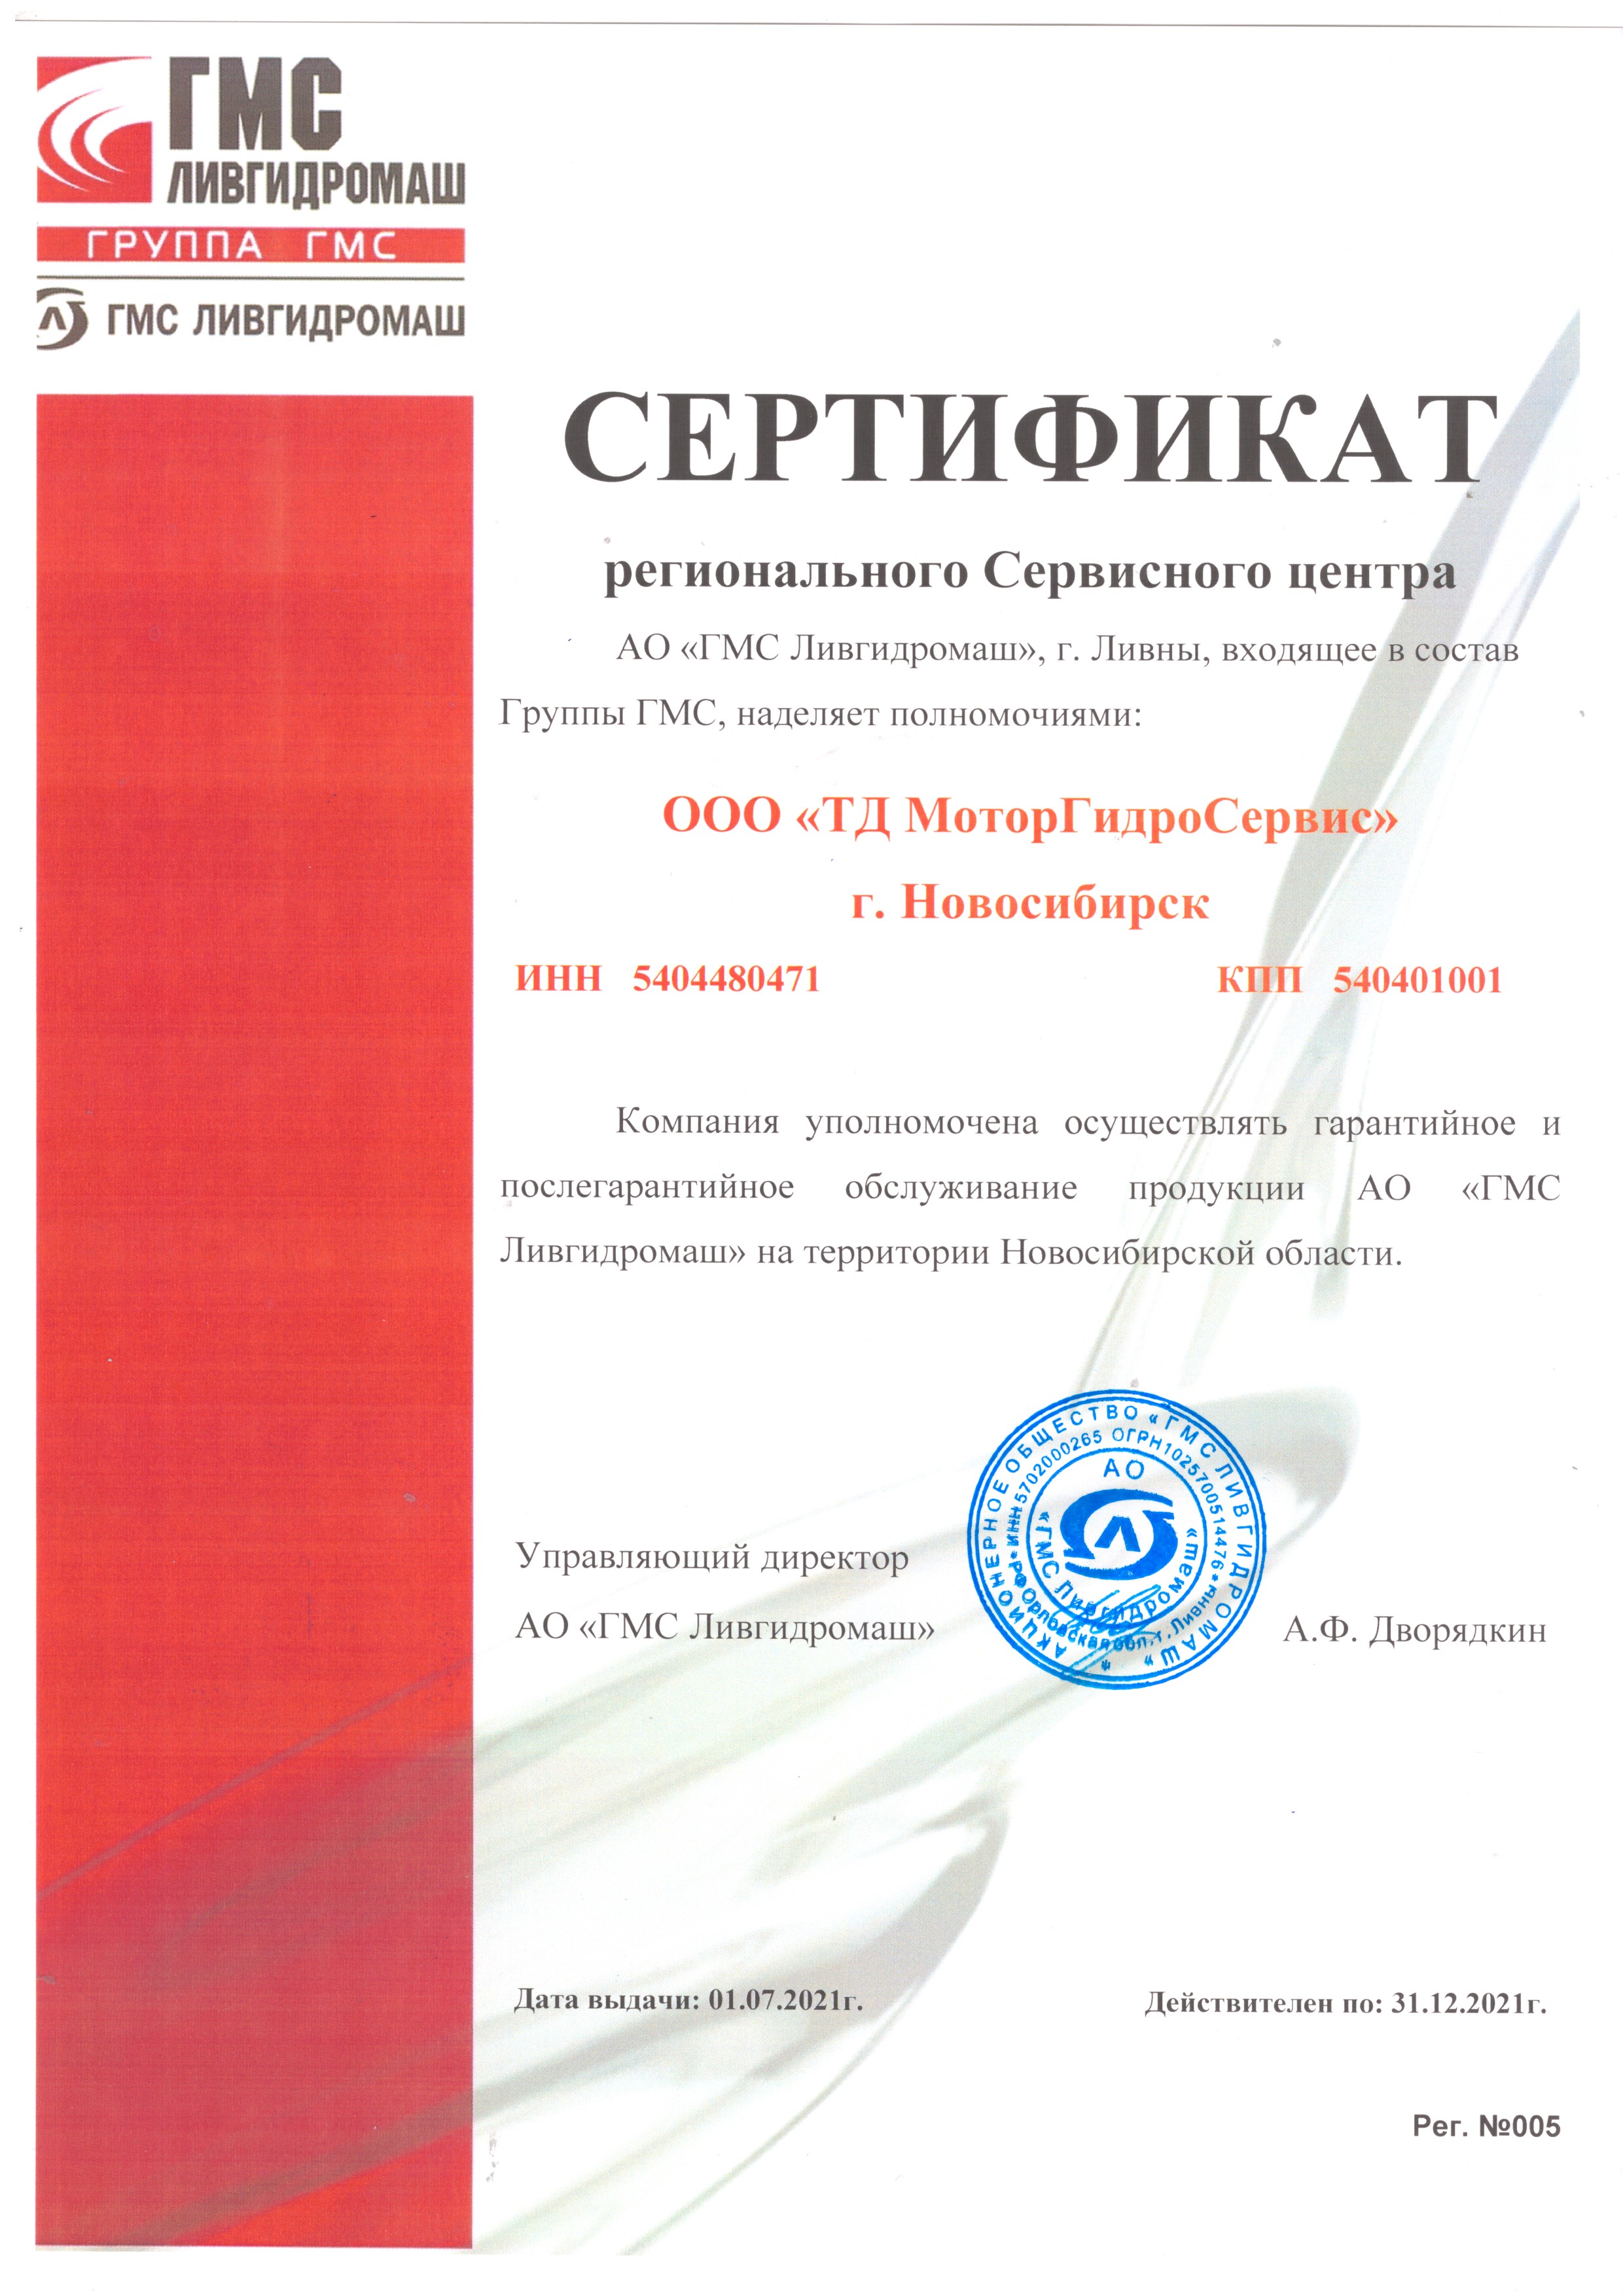 Сертификат|Сервисного центра